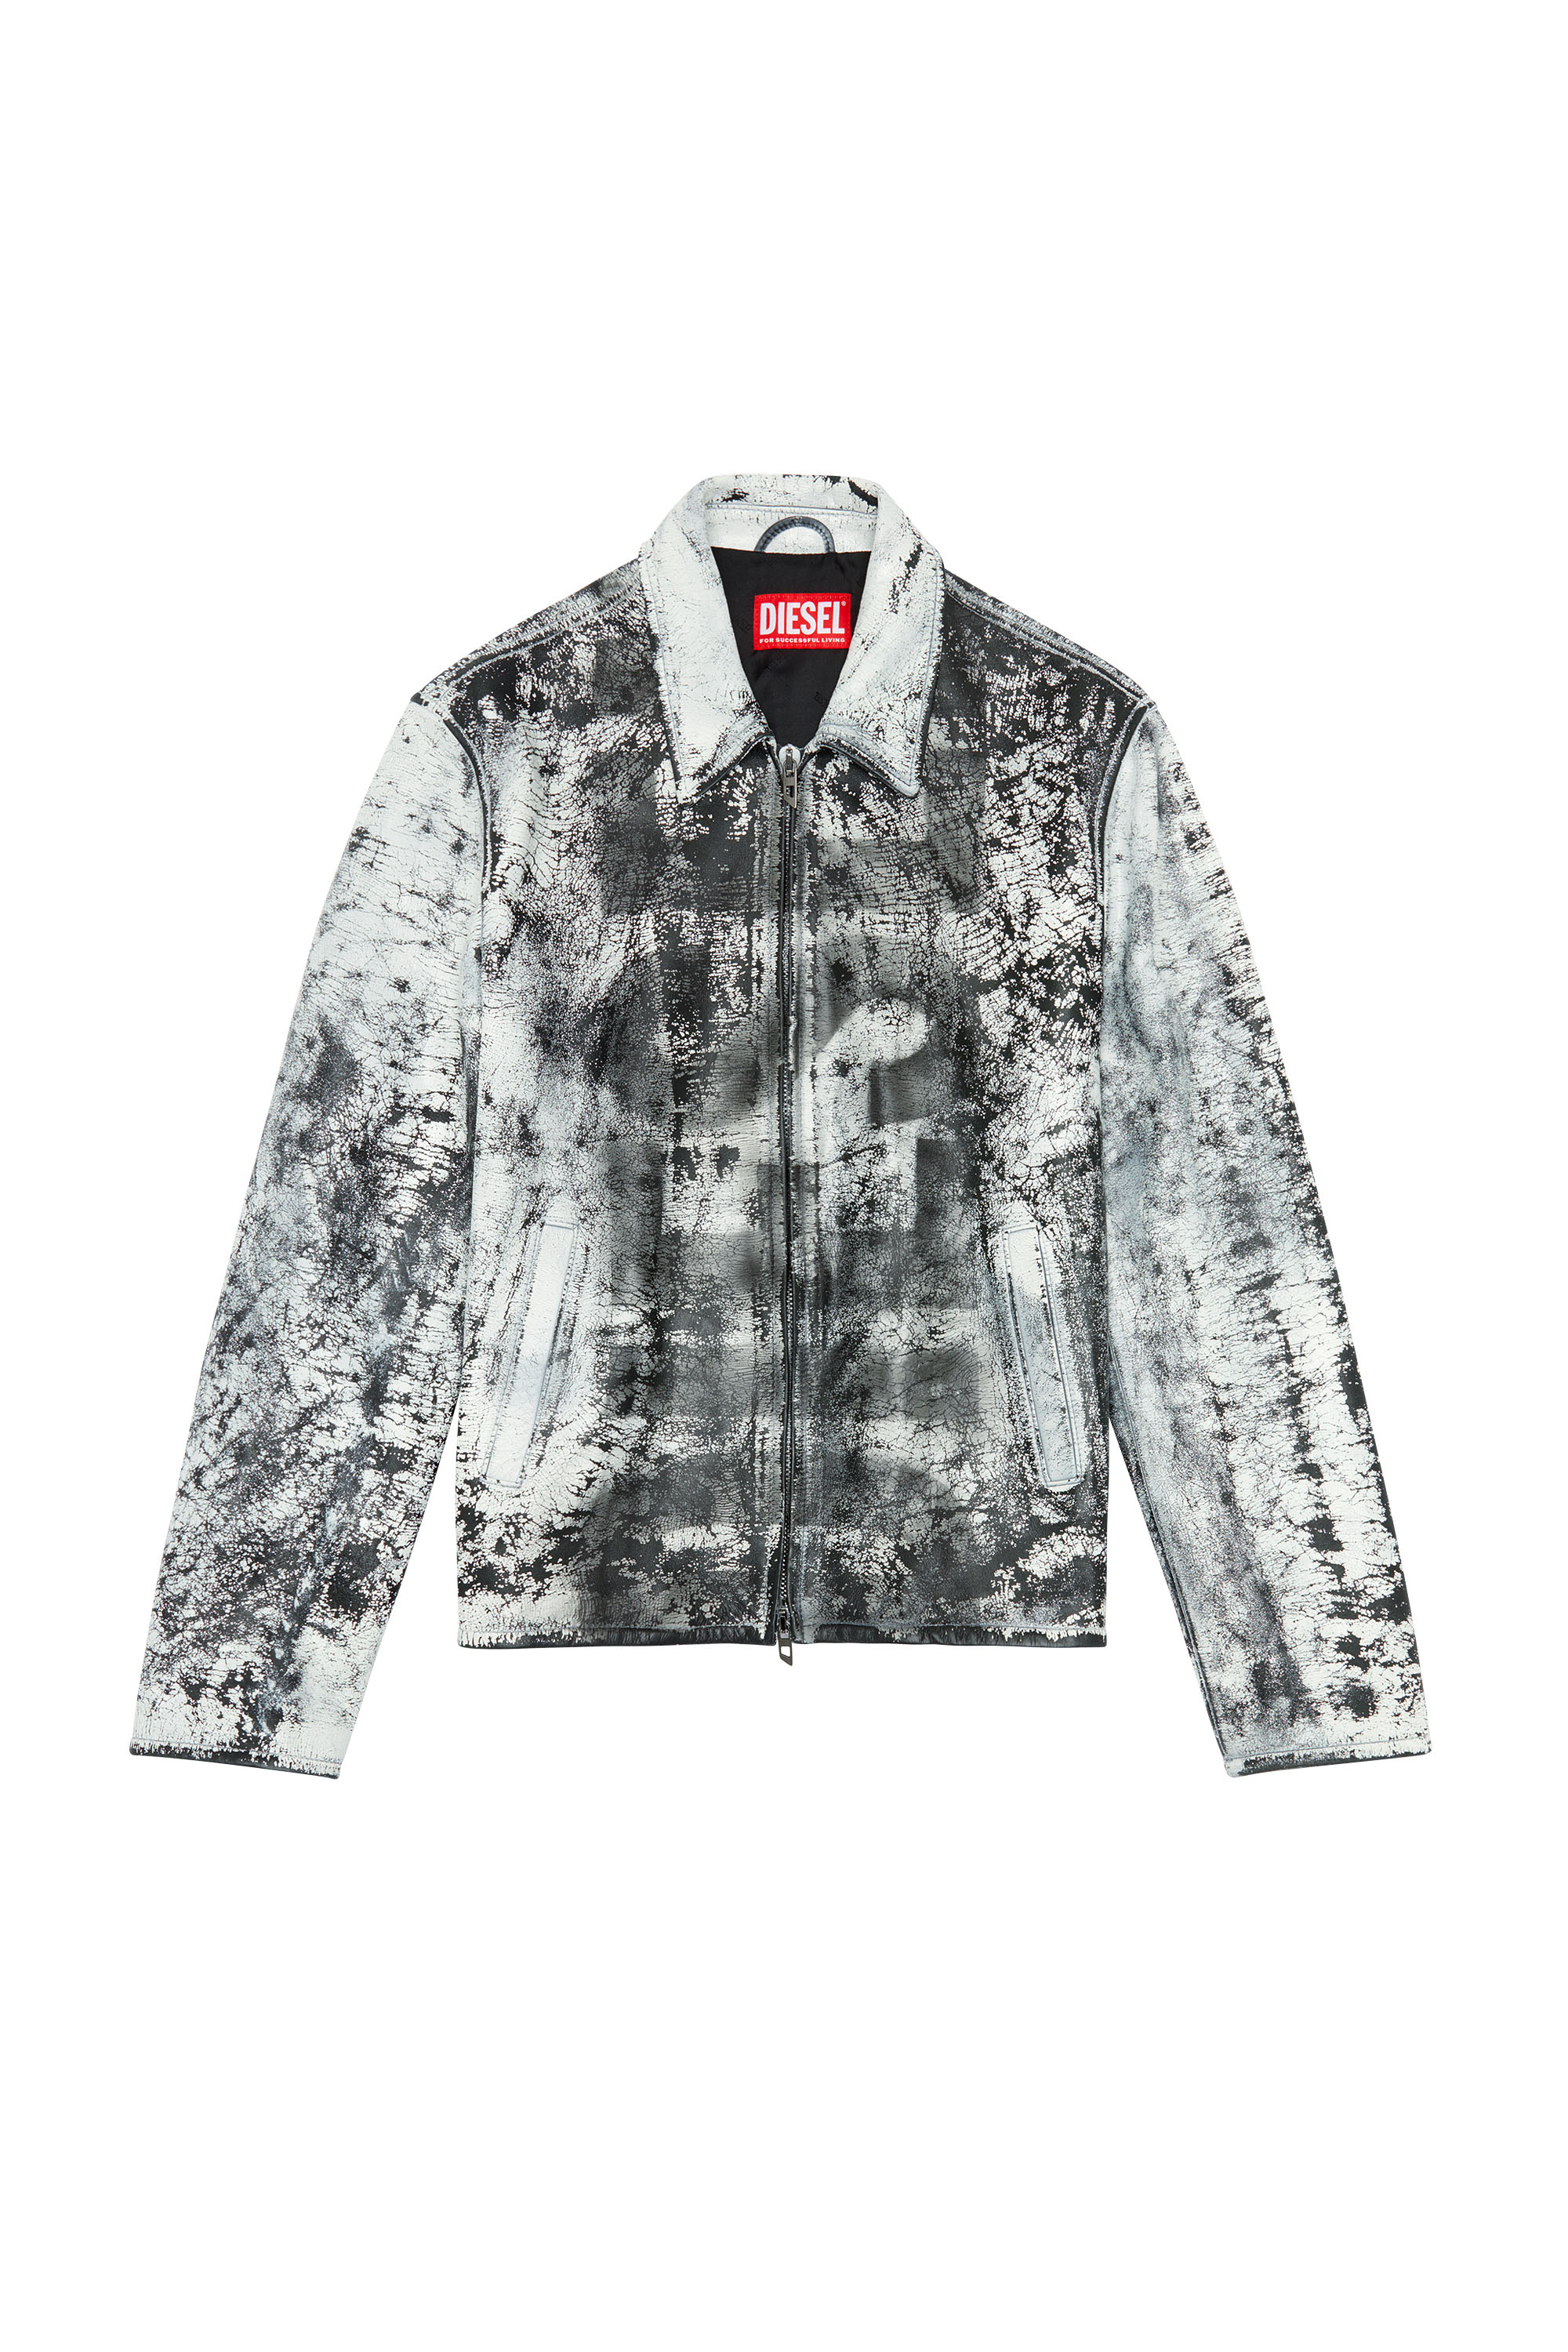 Diesel - L-PYLON-A, Man Blouson jacket in treated leather in Multicolor - Image 3